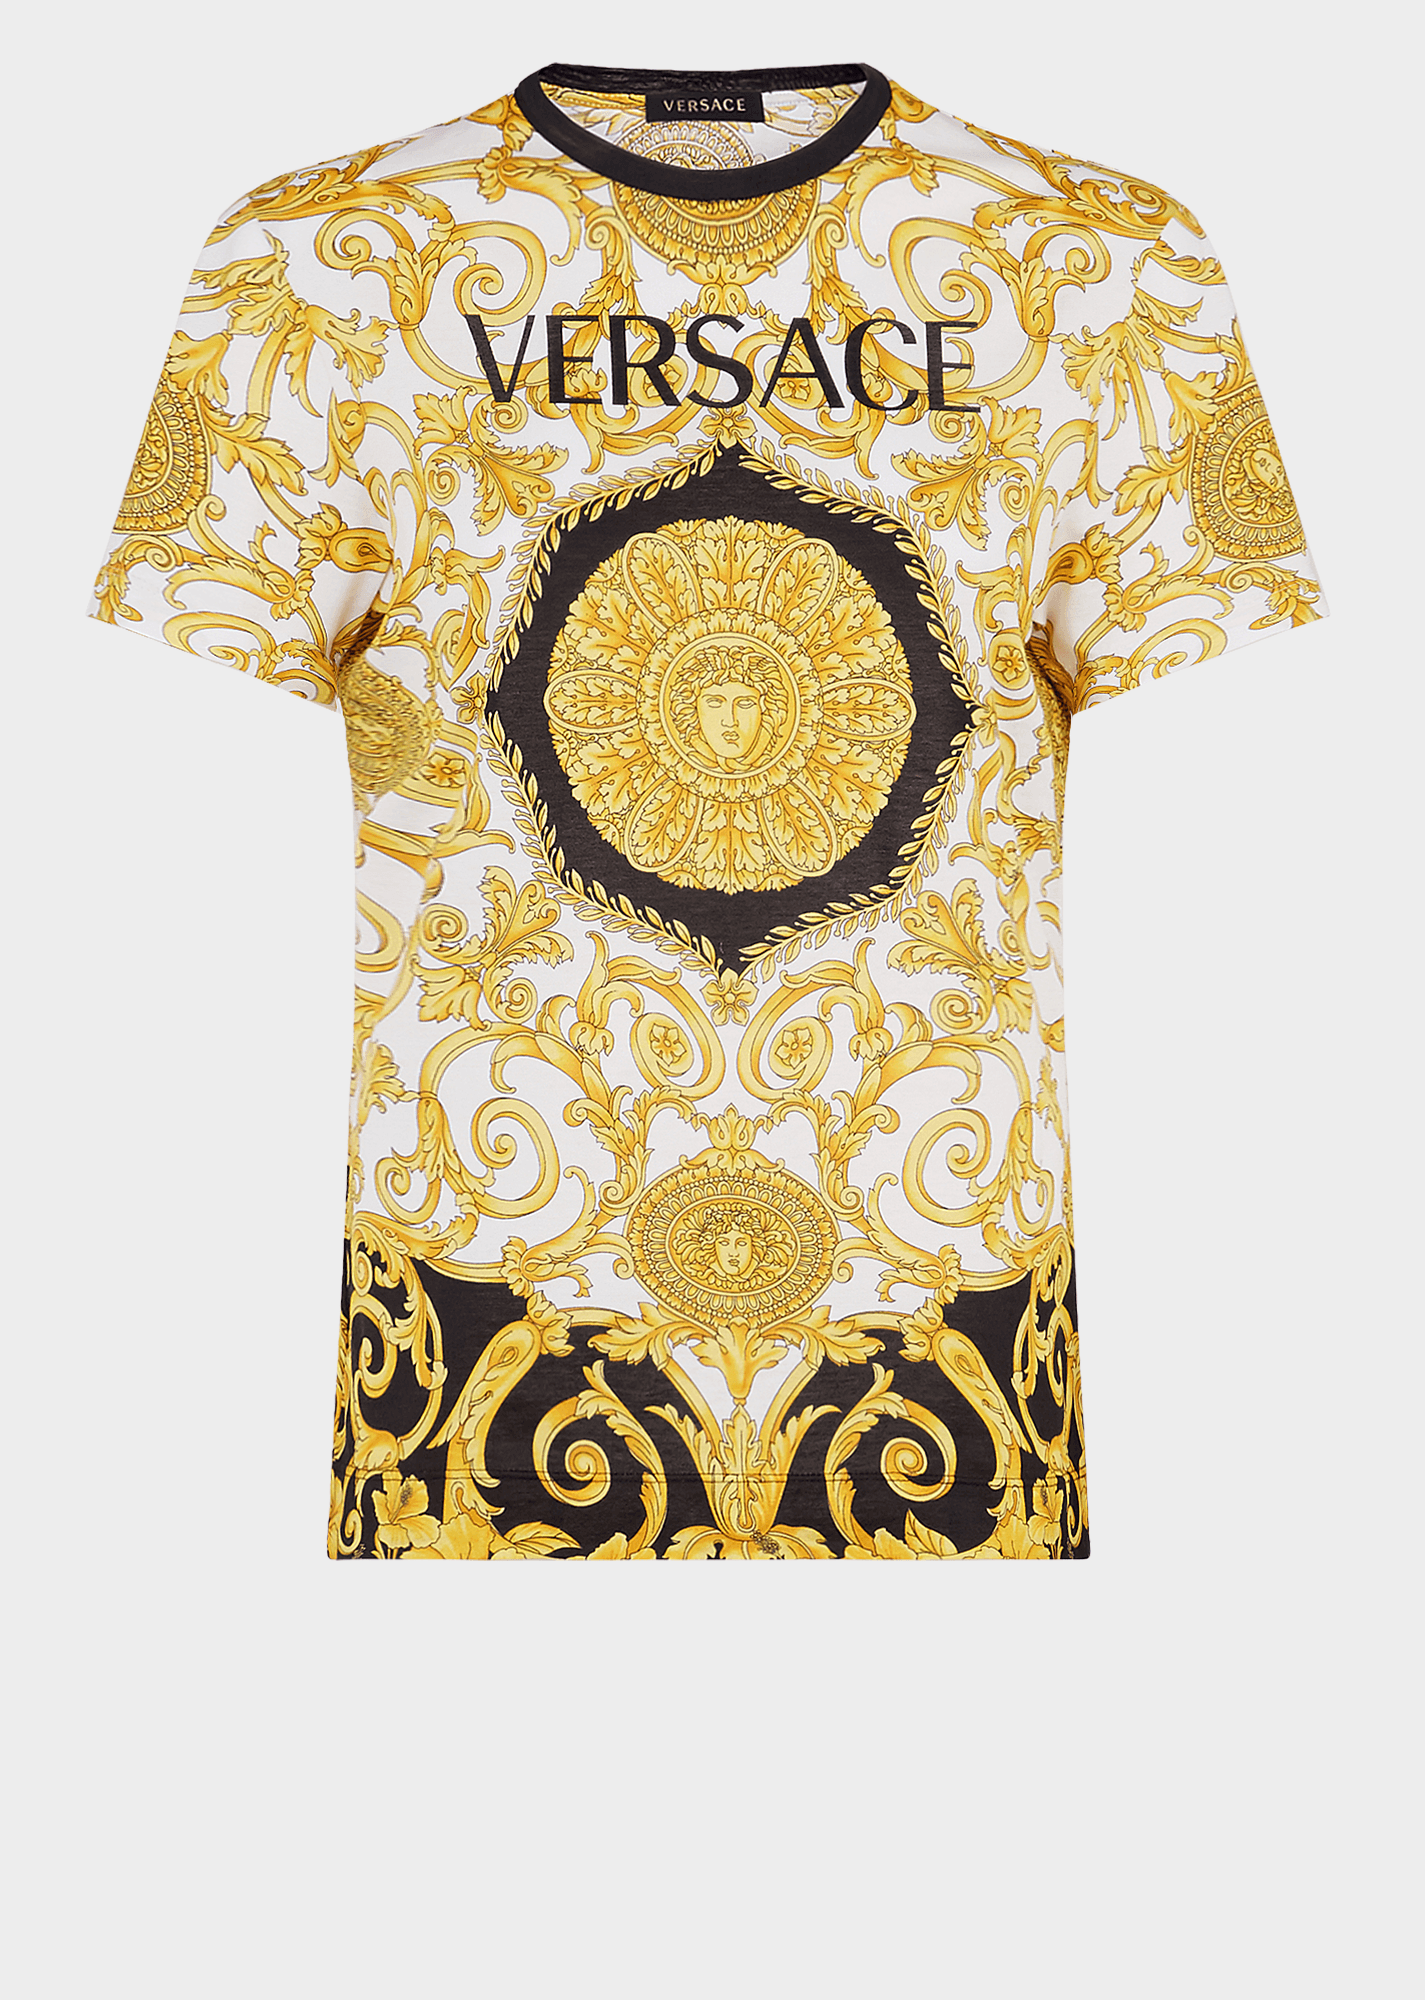 Versace Gold Logo - Versace Gold Hibiscus Print Logo T-Shirt for Women | UK Online Store